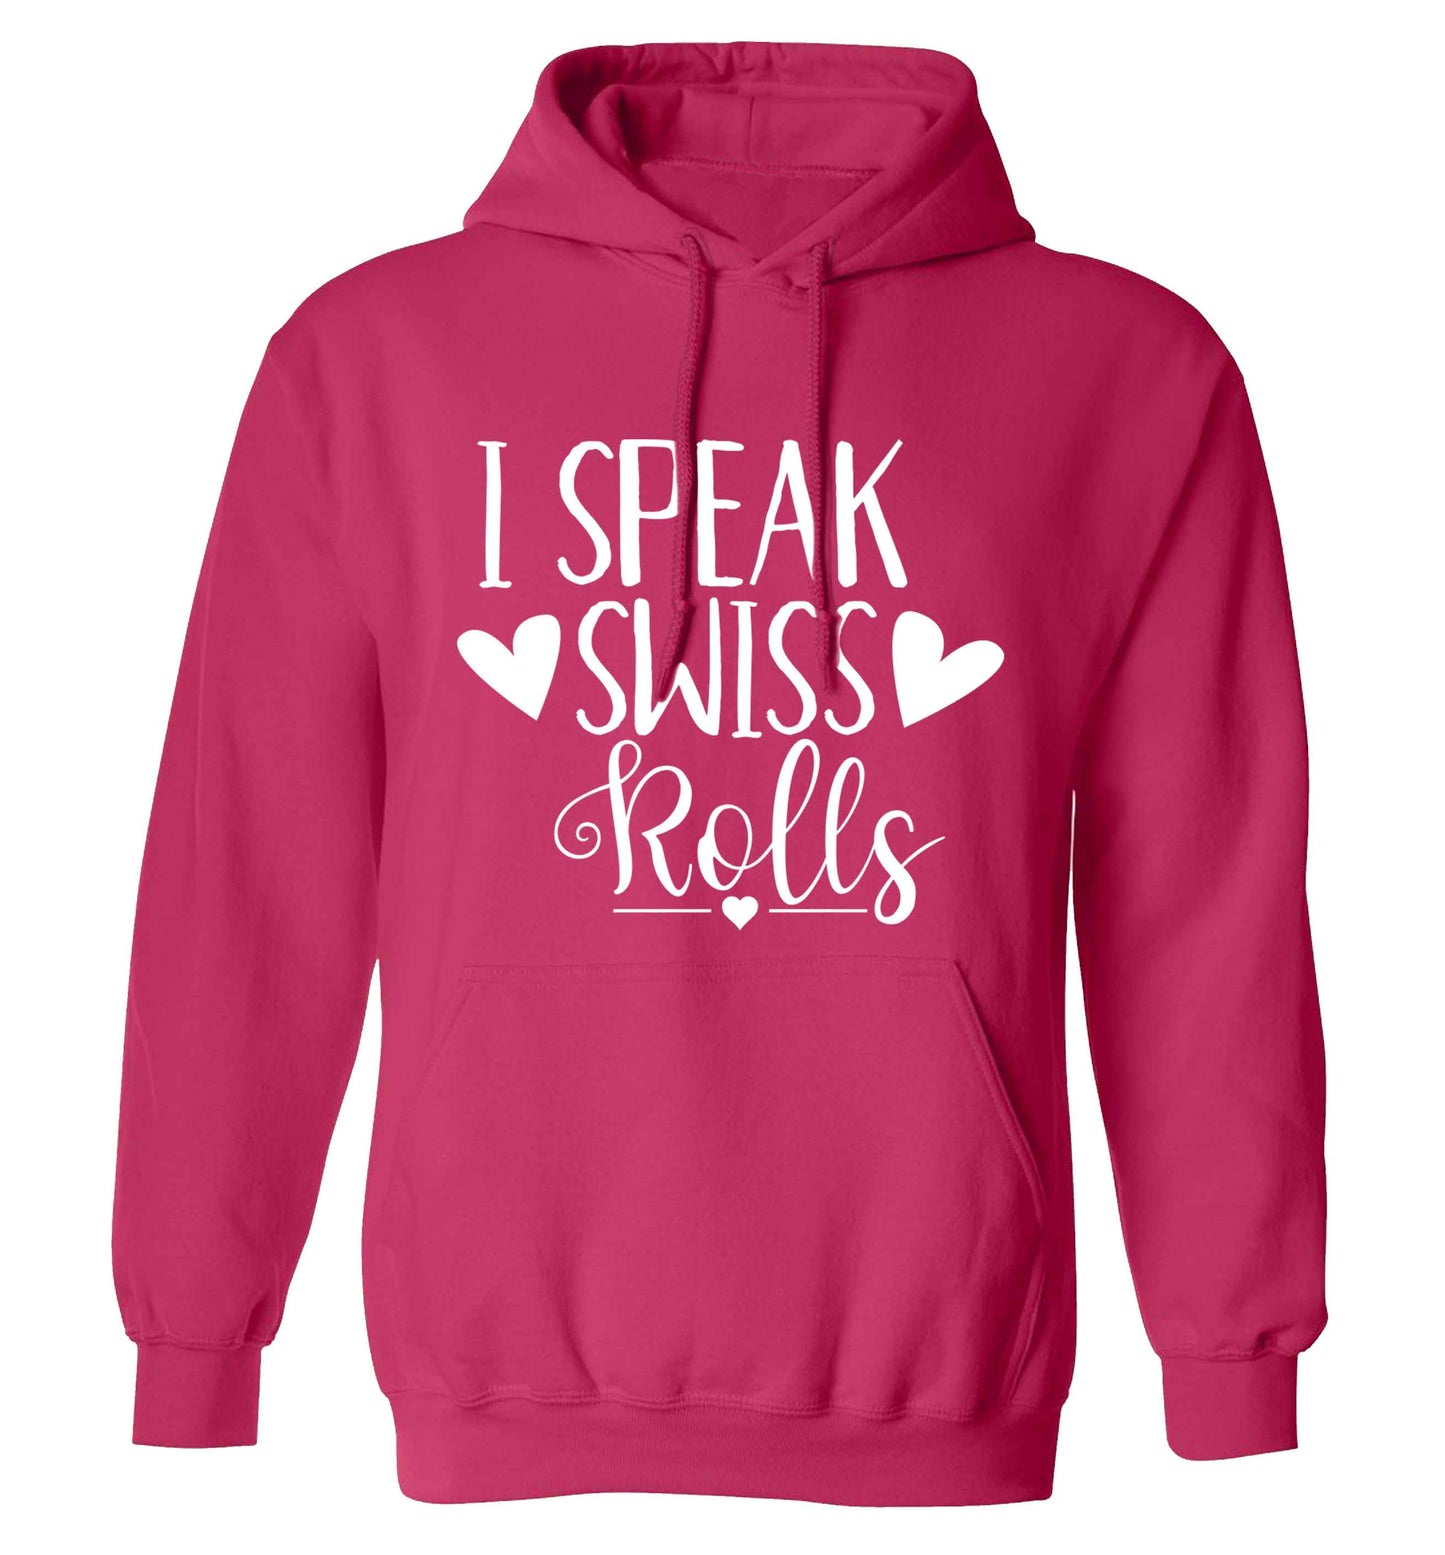 I speak swiss..rolls adults unisex pink hoodie 2XL